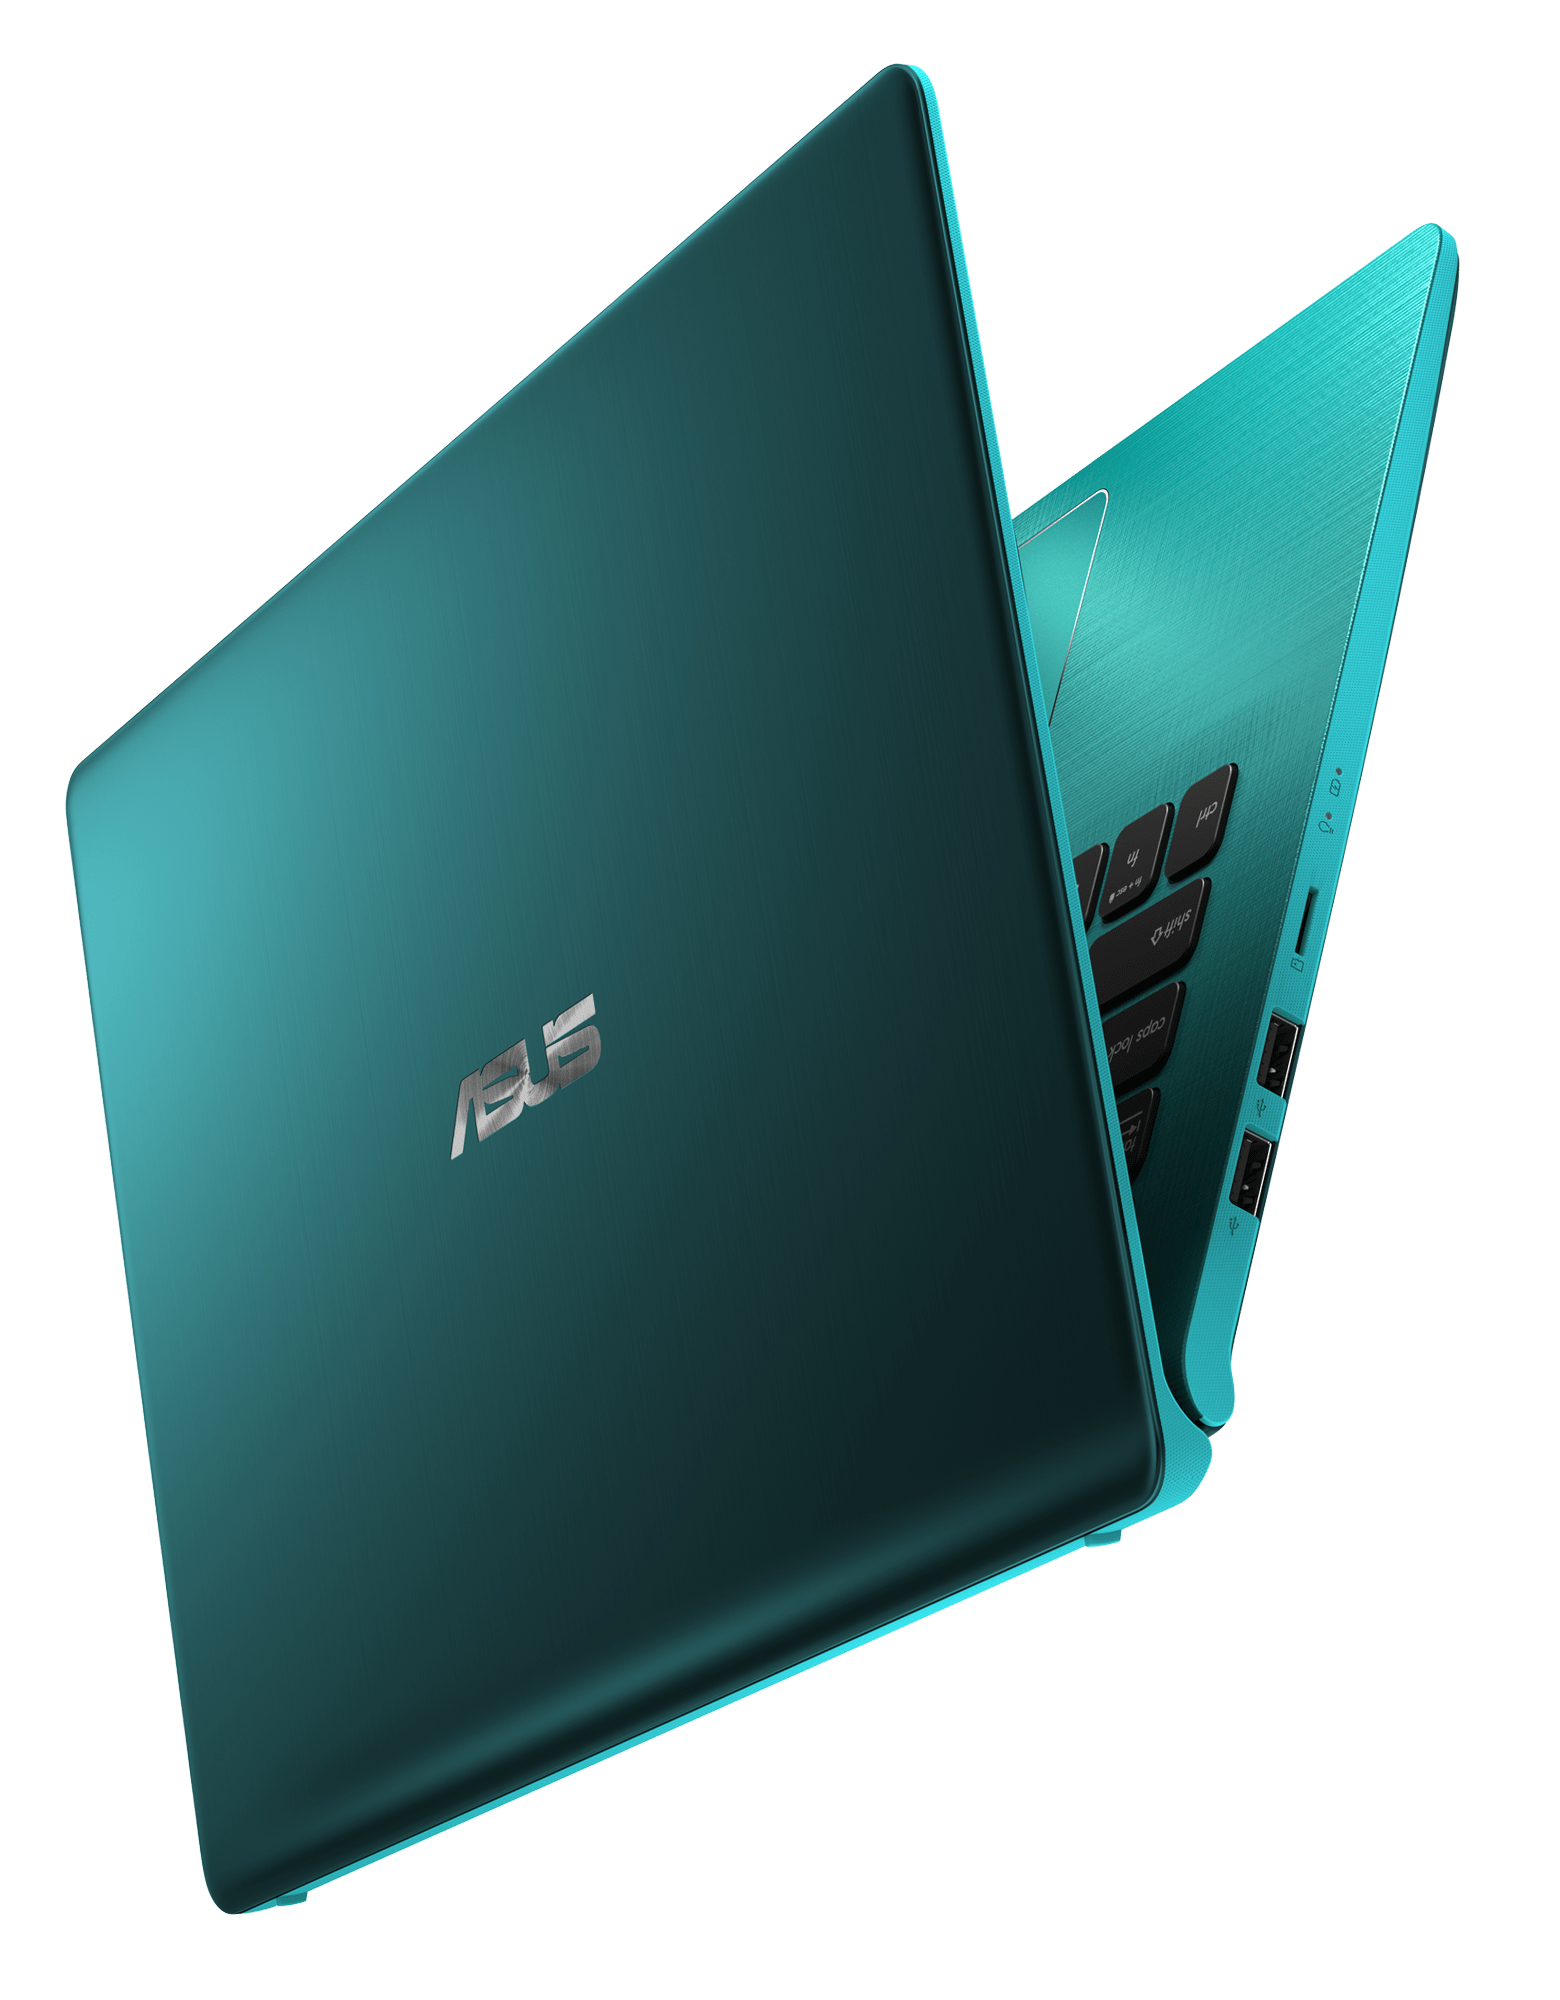 Laptop Asus Vivobook S430UA